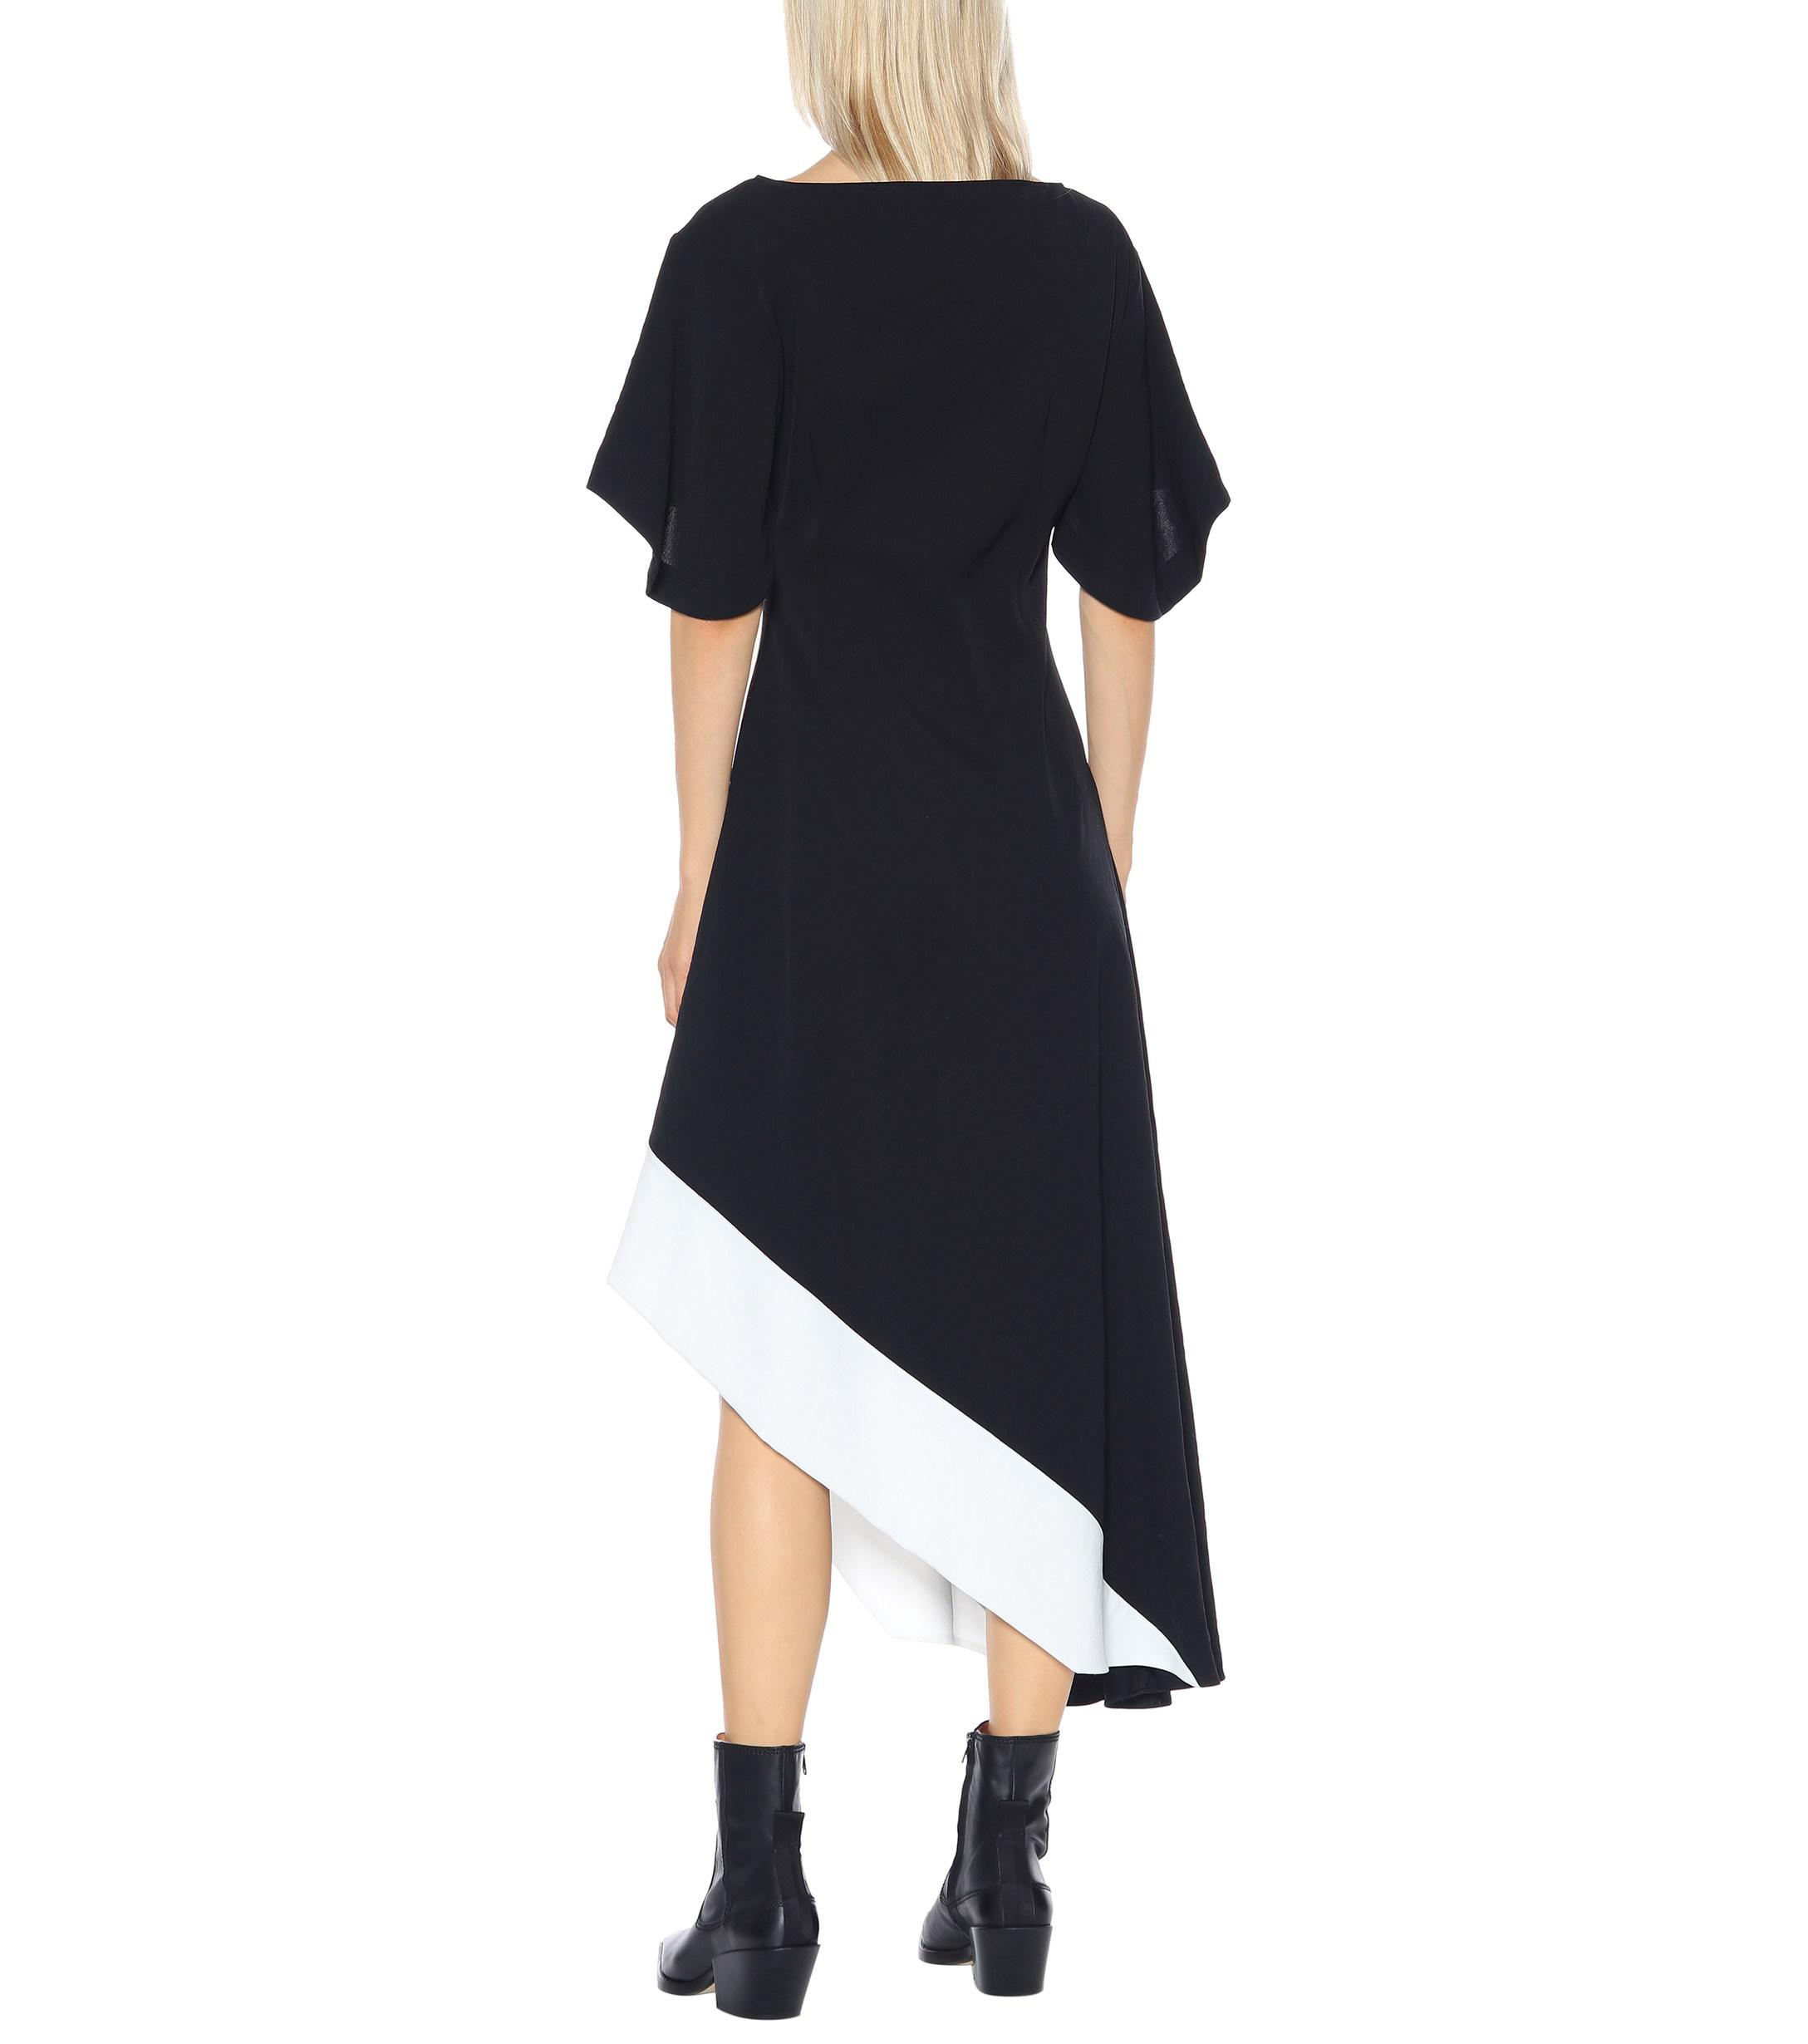 Loewe Synthetic Asymmetric Dress in Black White (Black) - Lyst